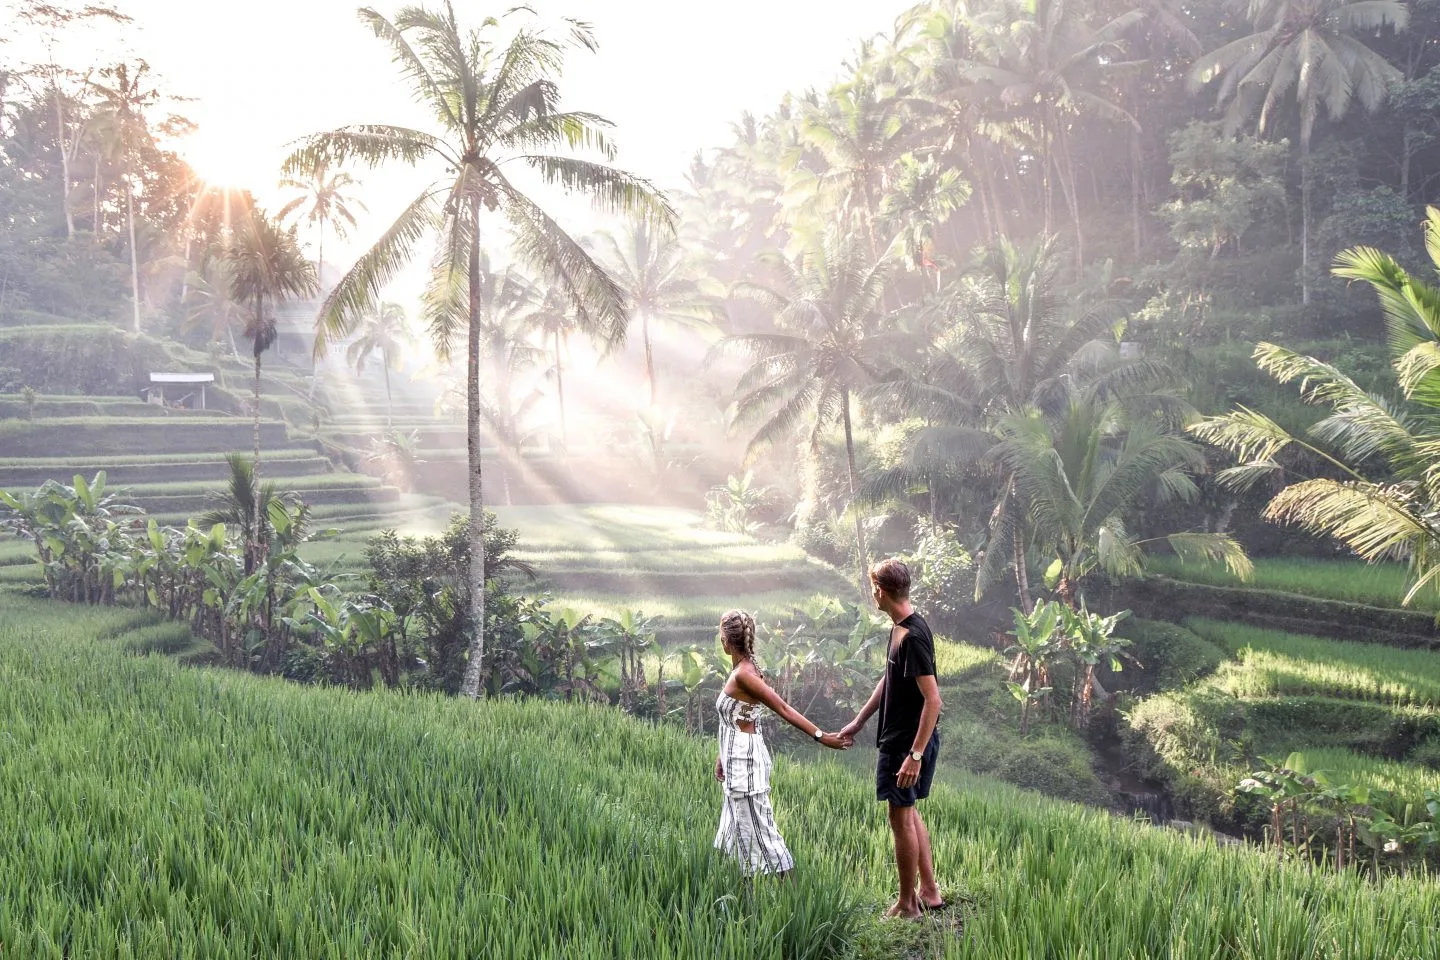 Tegallalang Rice Terrace Field,Tegalalang Village,Balinese culture